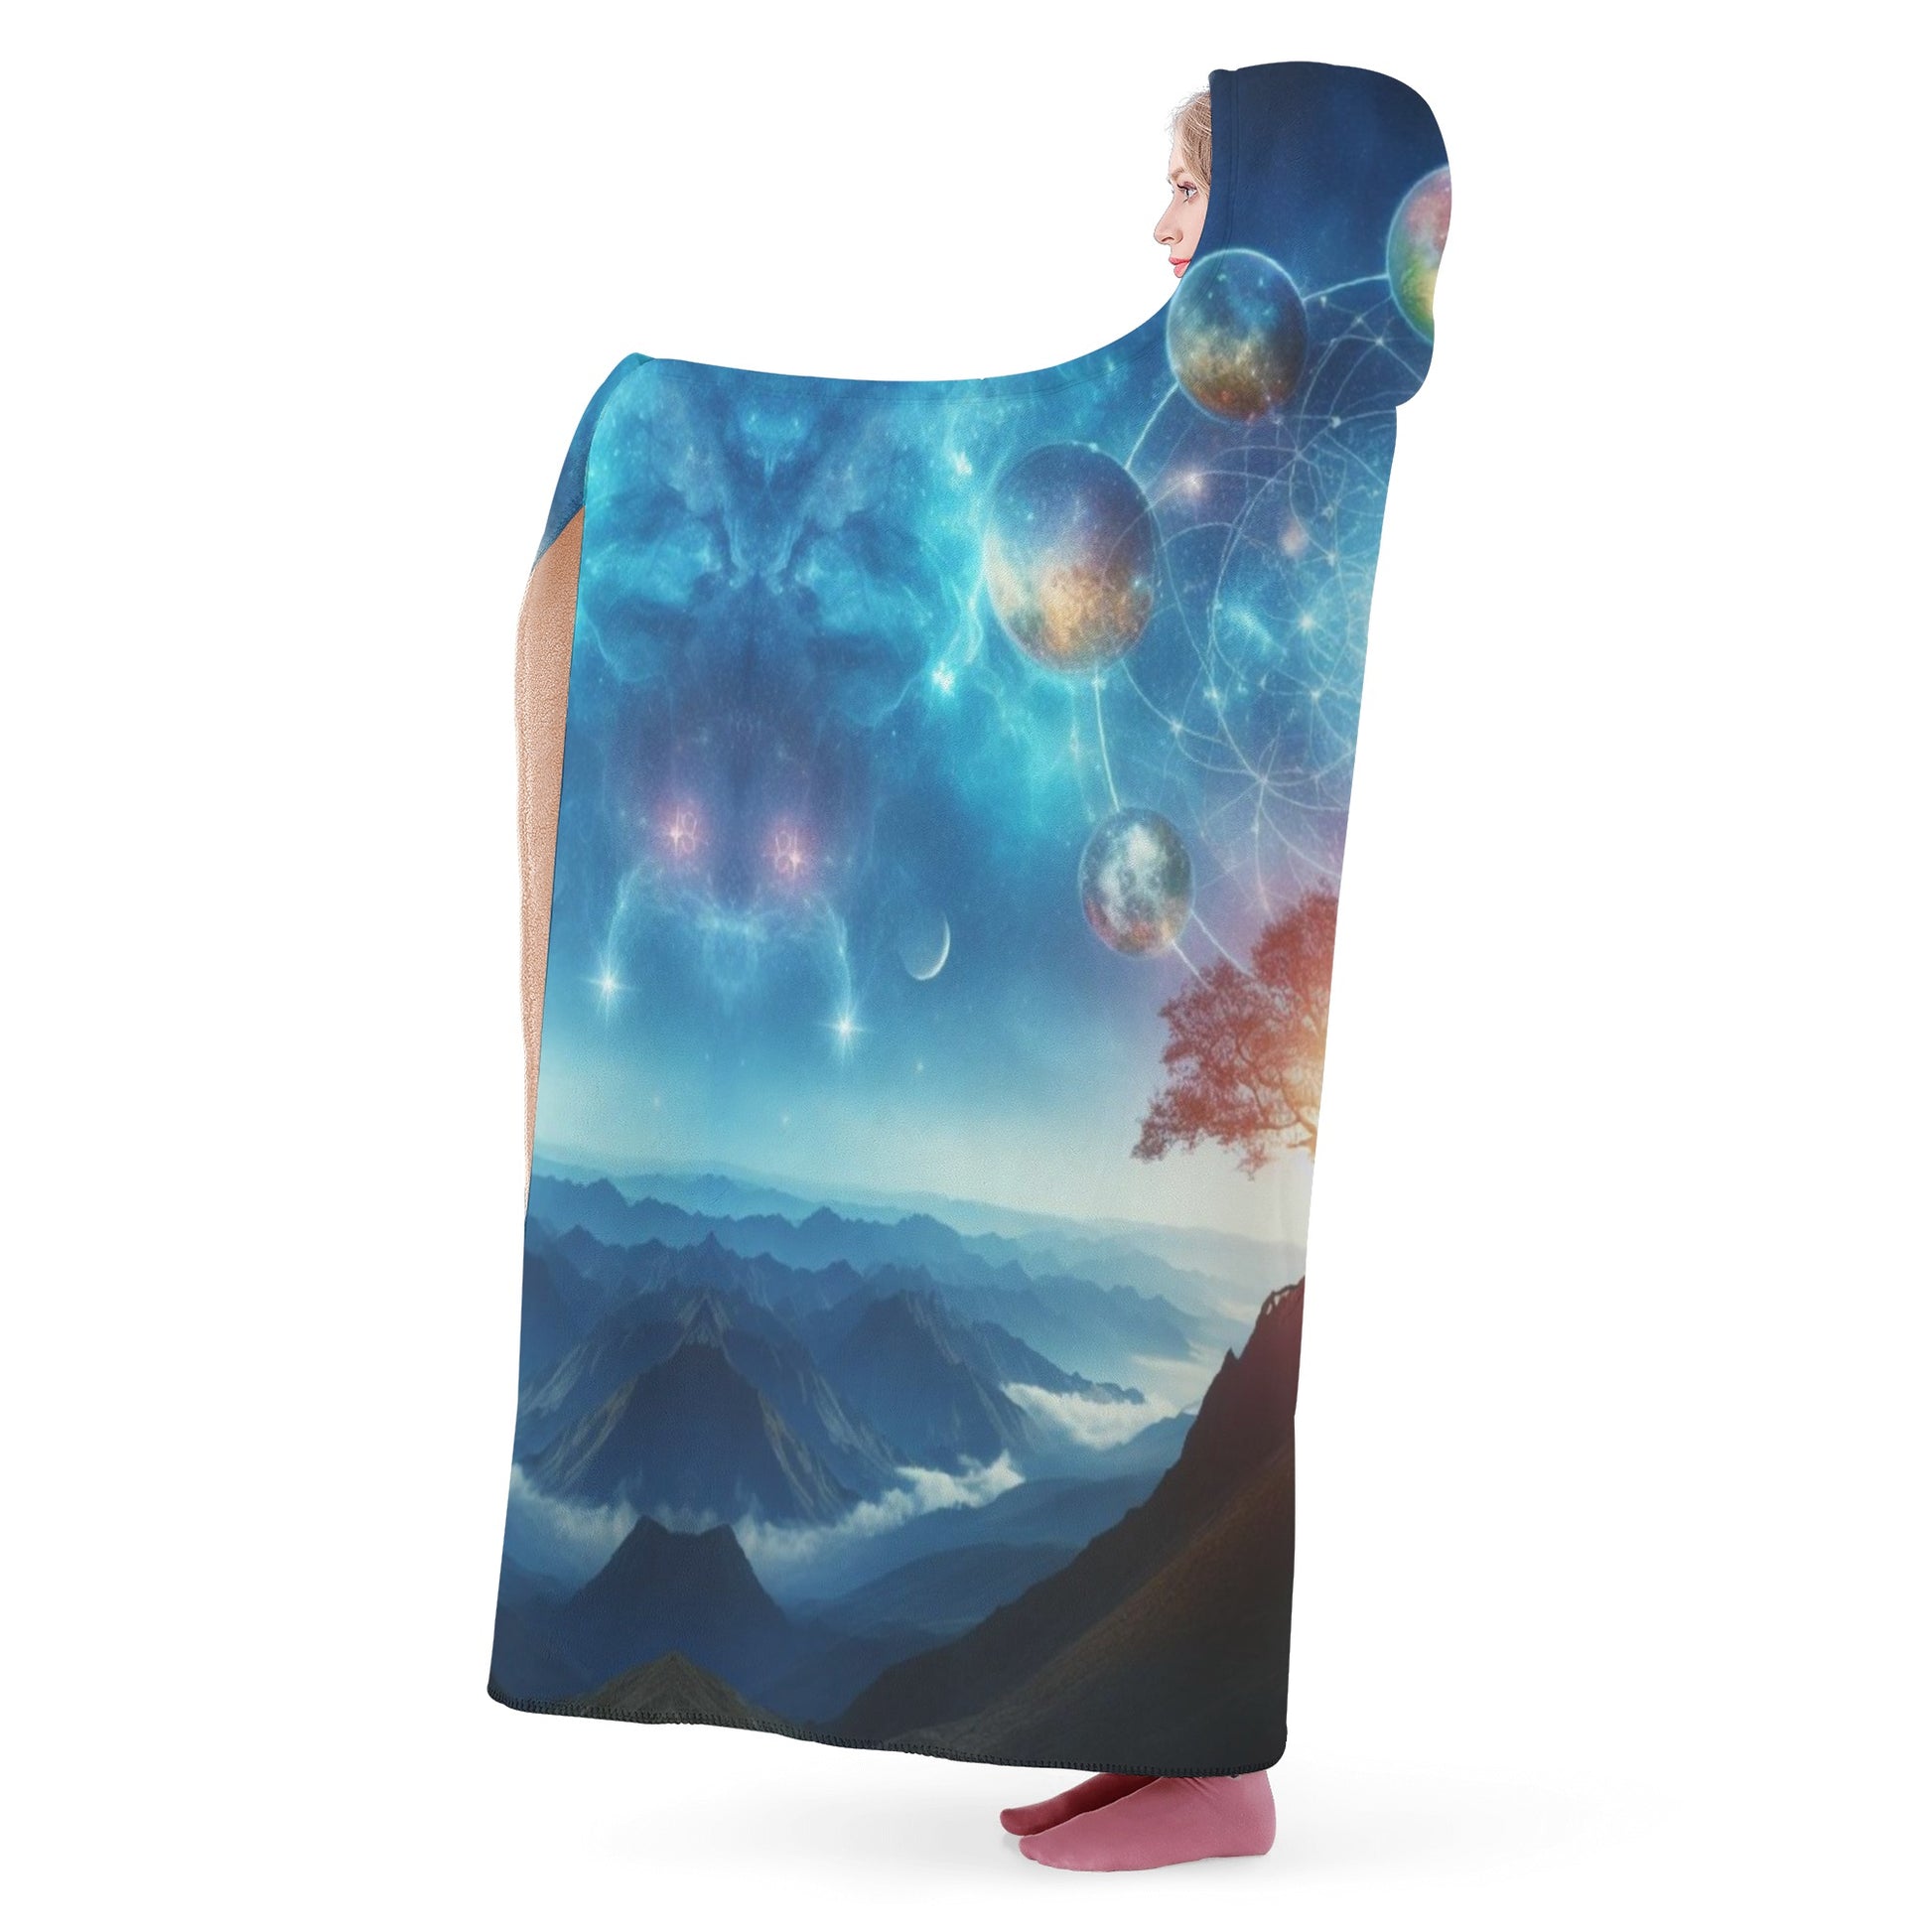 Celestial Tree of Life | Hooded Blanket - AGTC